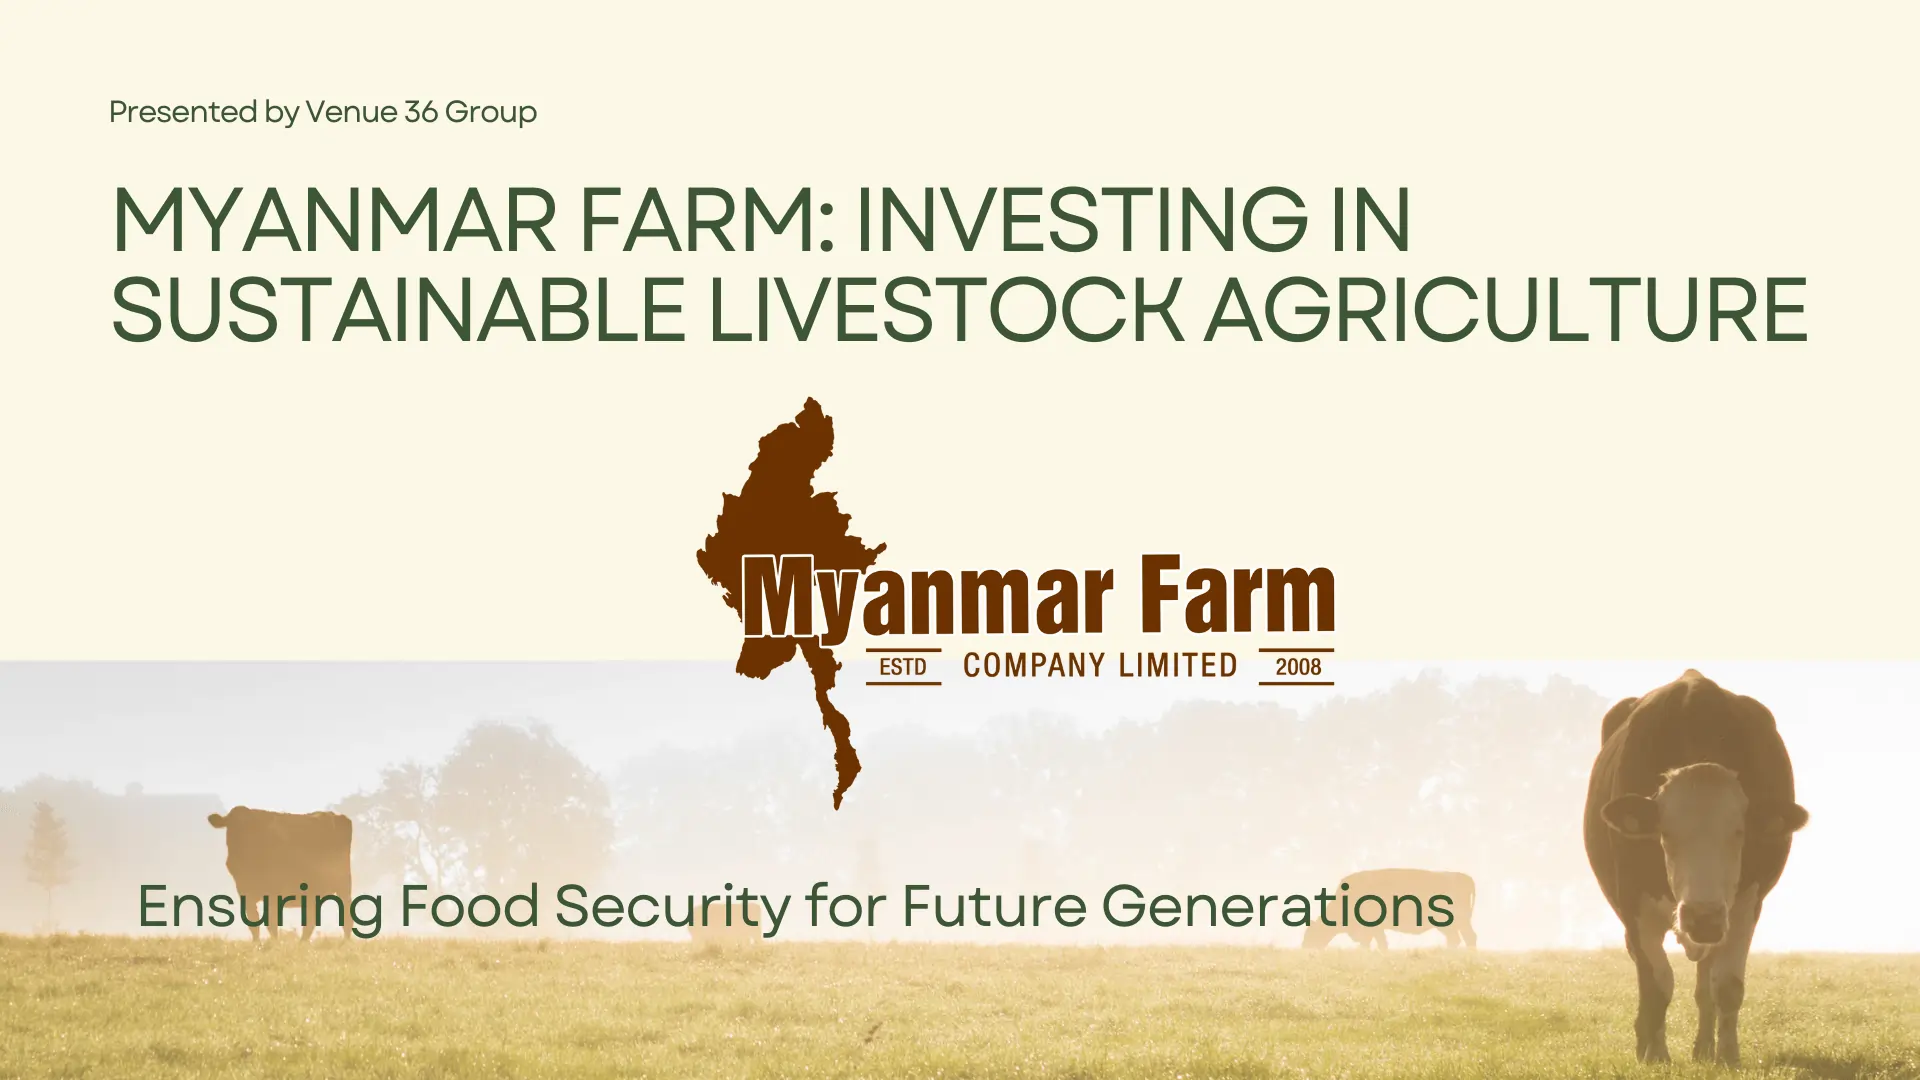 Harmonious Livestock Grazing in Our Sustainable Farm